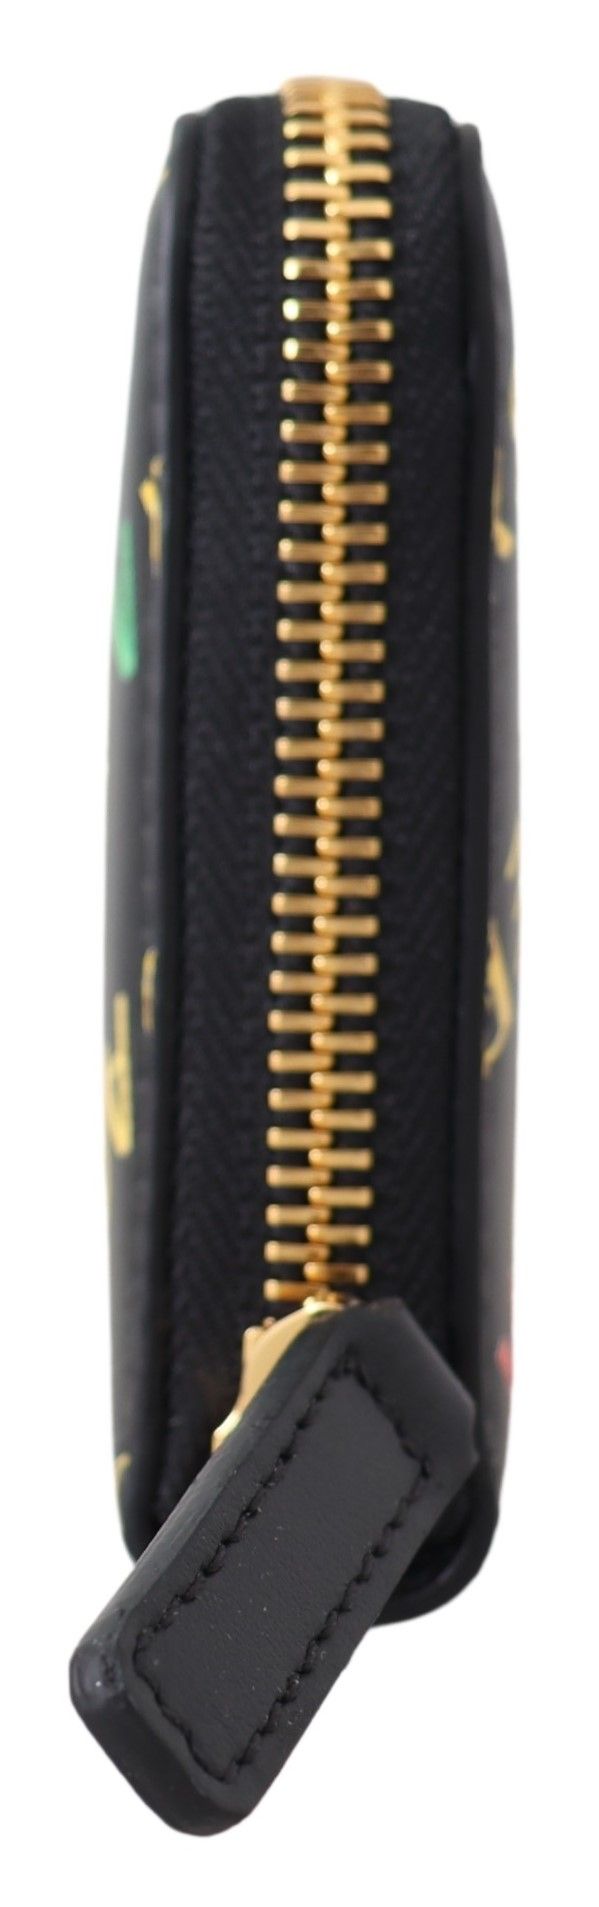 Elegant Black Zip Around Leather Wallet